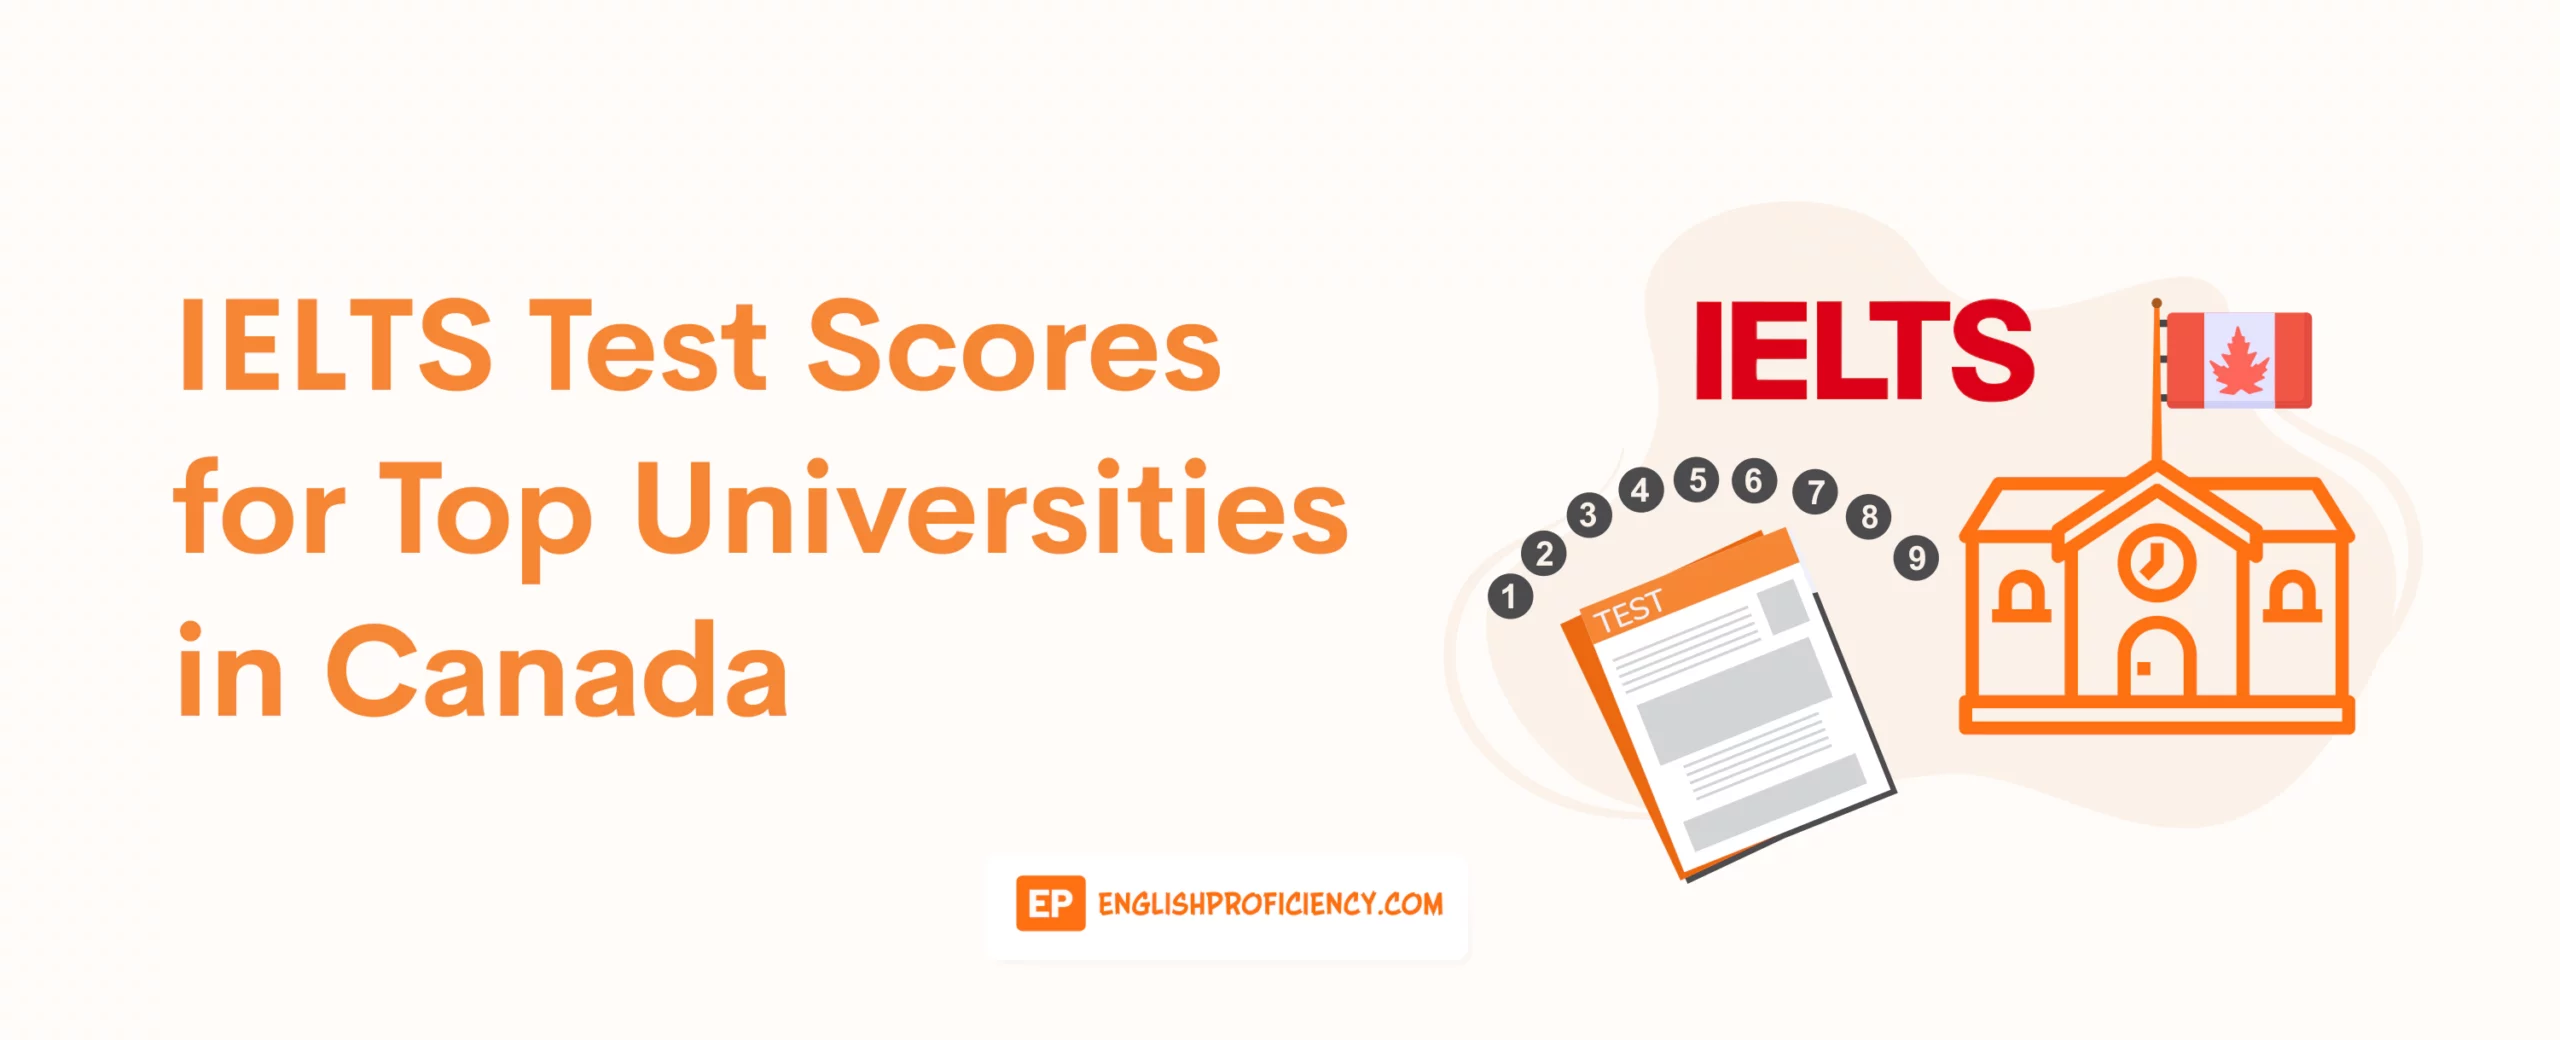 IELTS Test Scores for Top Universities in Canada